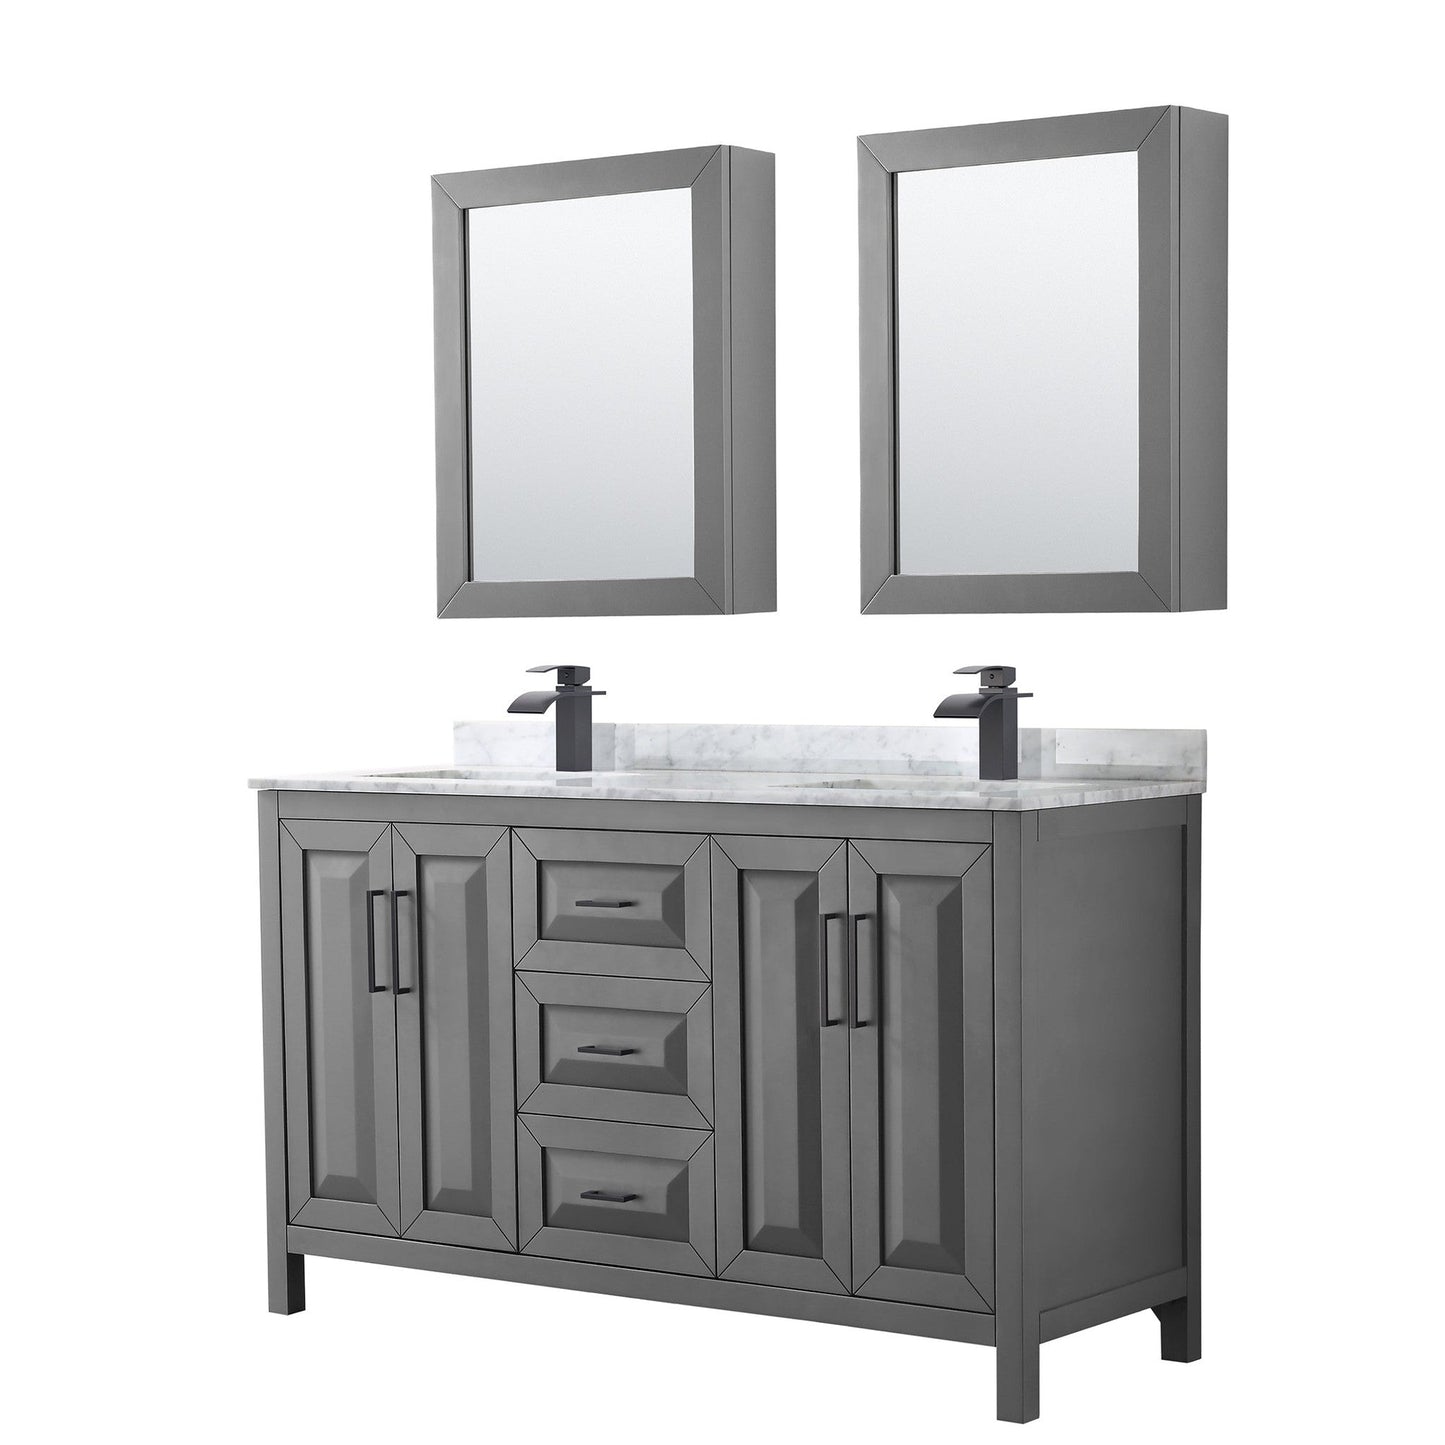 Daria 60" Double Bathroom Vanity in Dark Gray, White Carrara Marble Countertop, Undermount Square Sinks, Matte Black Trim, Medicine Cabinets